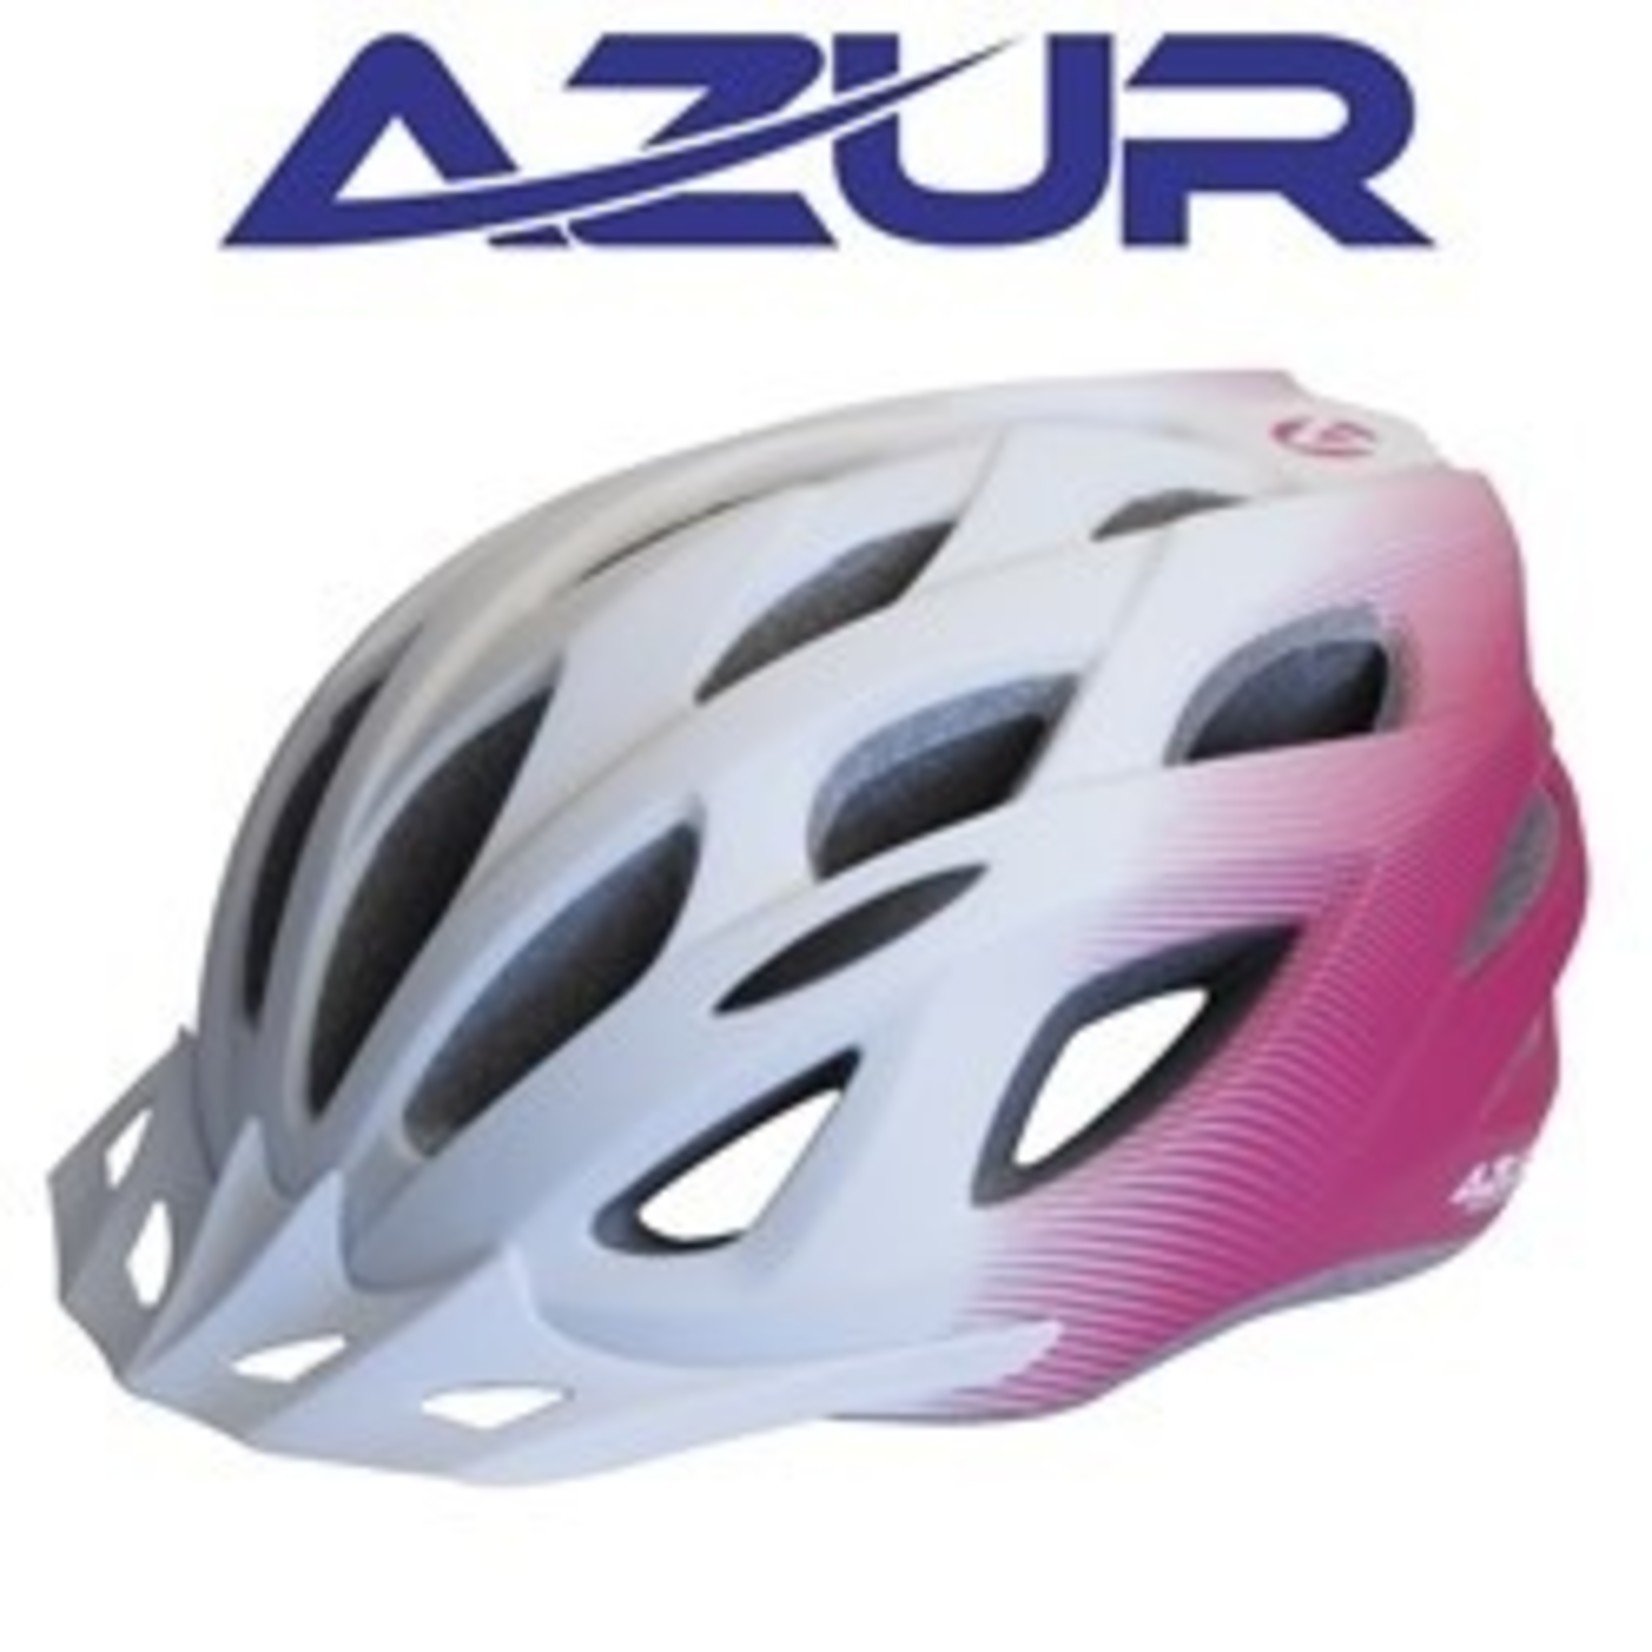 Azur Azur Bike Helmet - L61 Series - Pink/White Fade Lightweight in-Mould shell